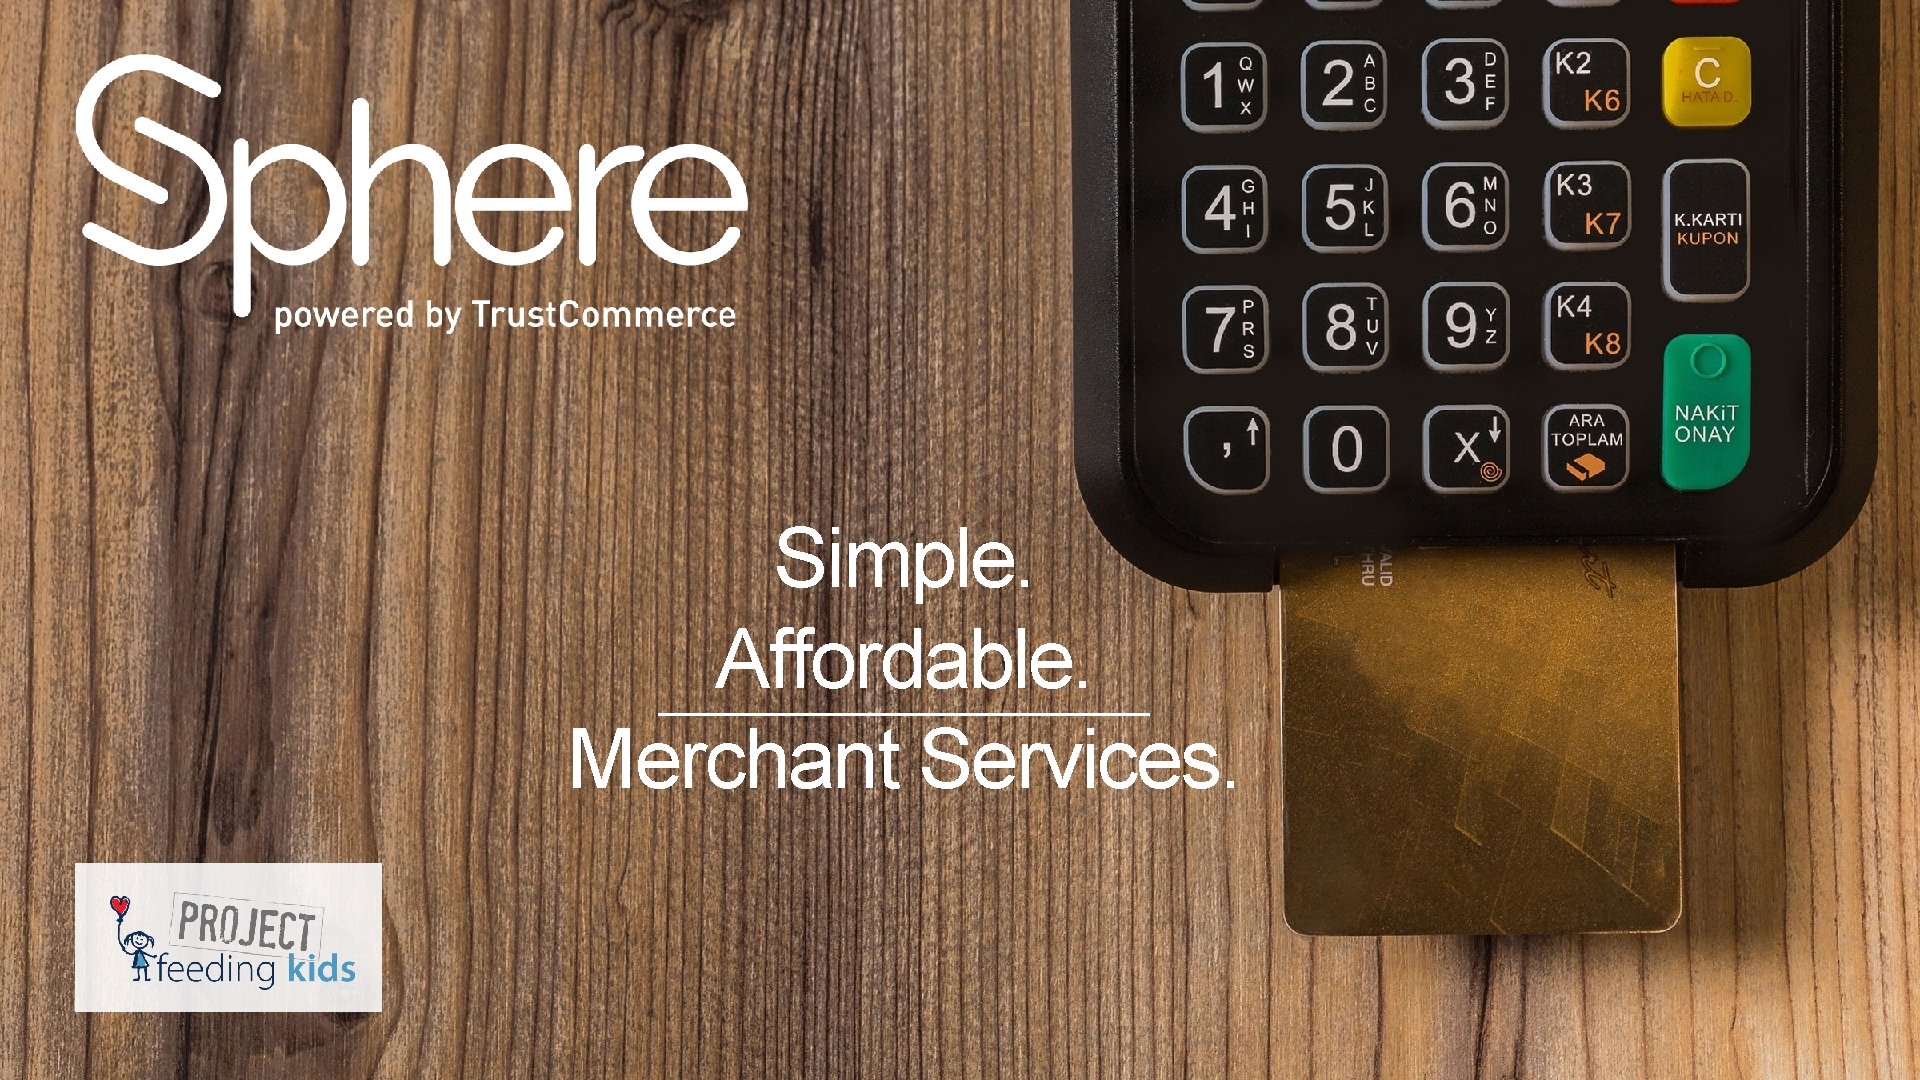 Simple. Affordable. Merchant Services. 